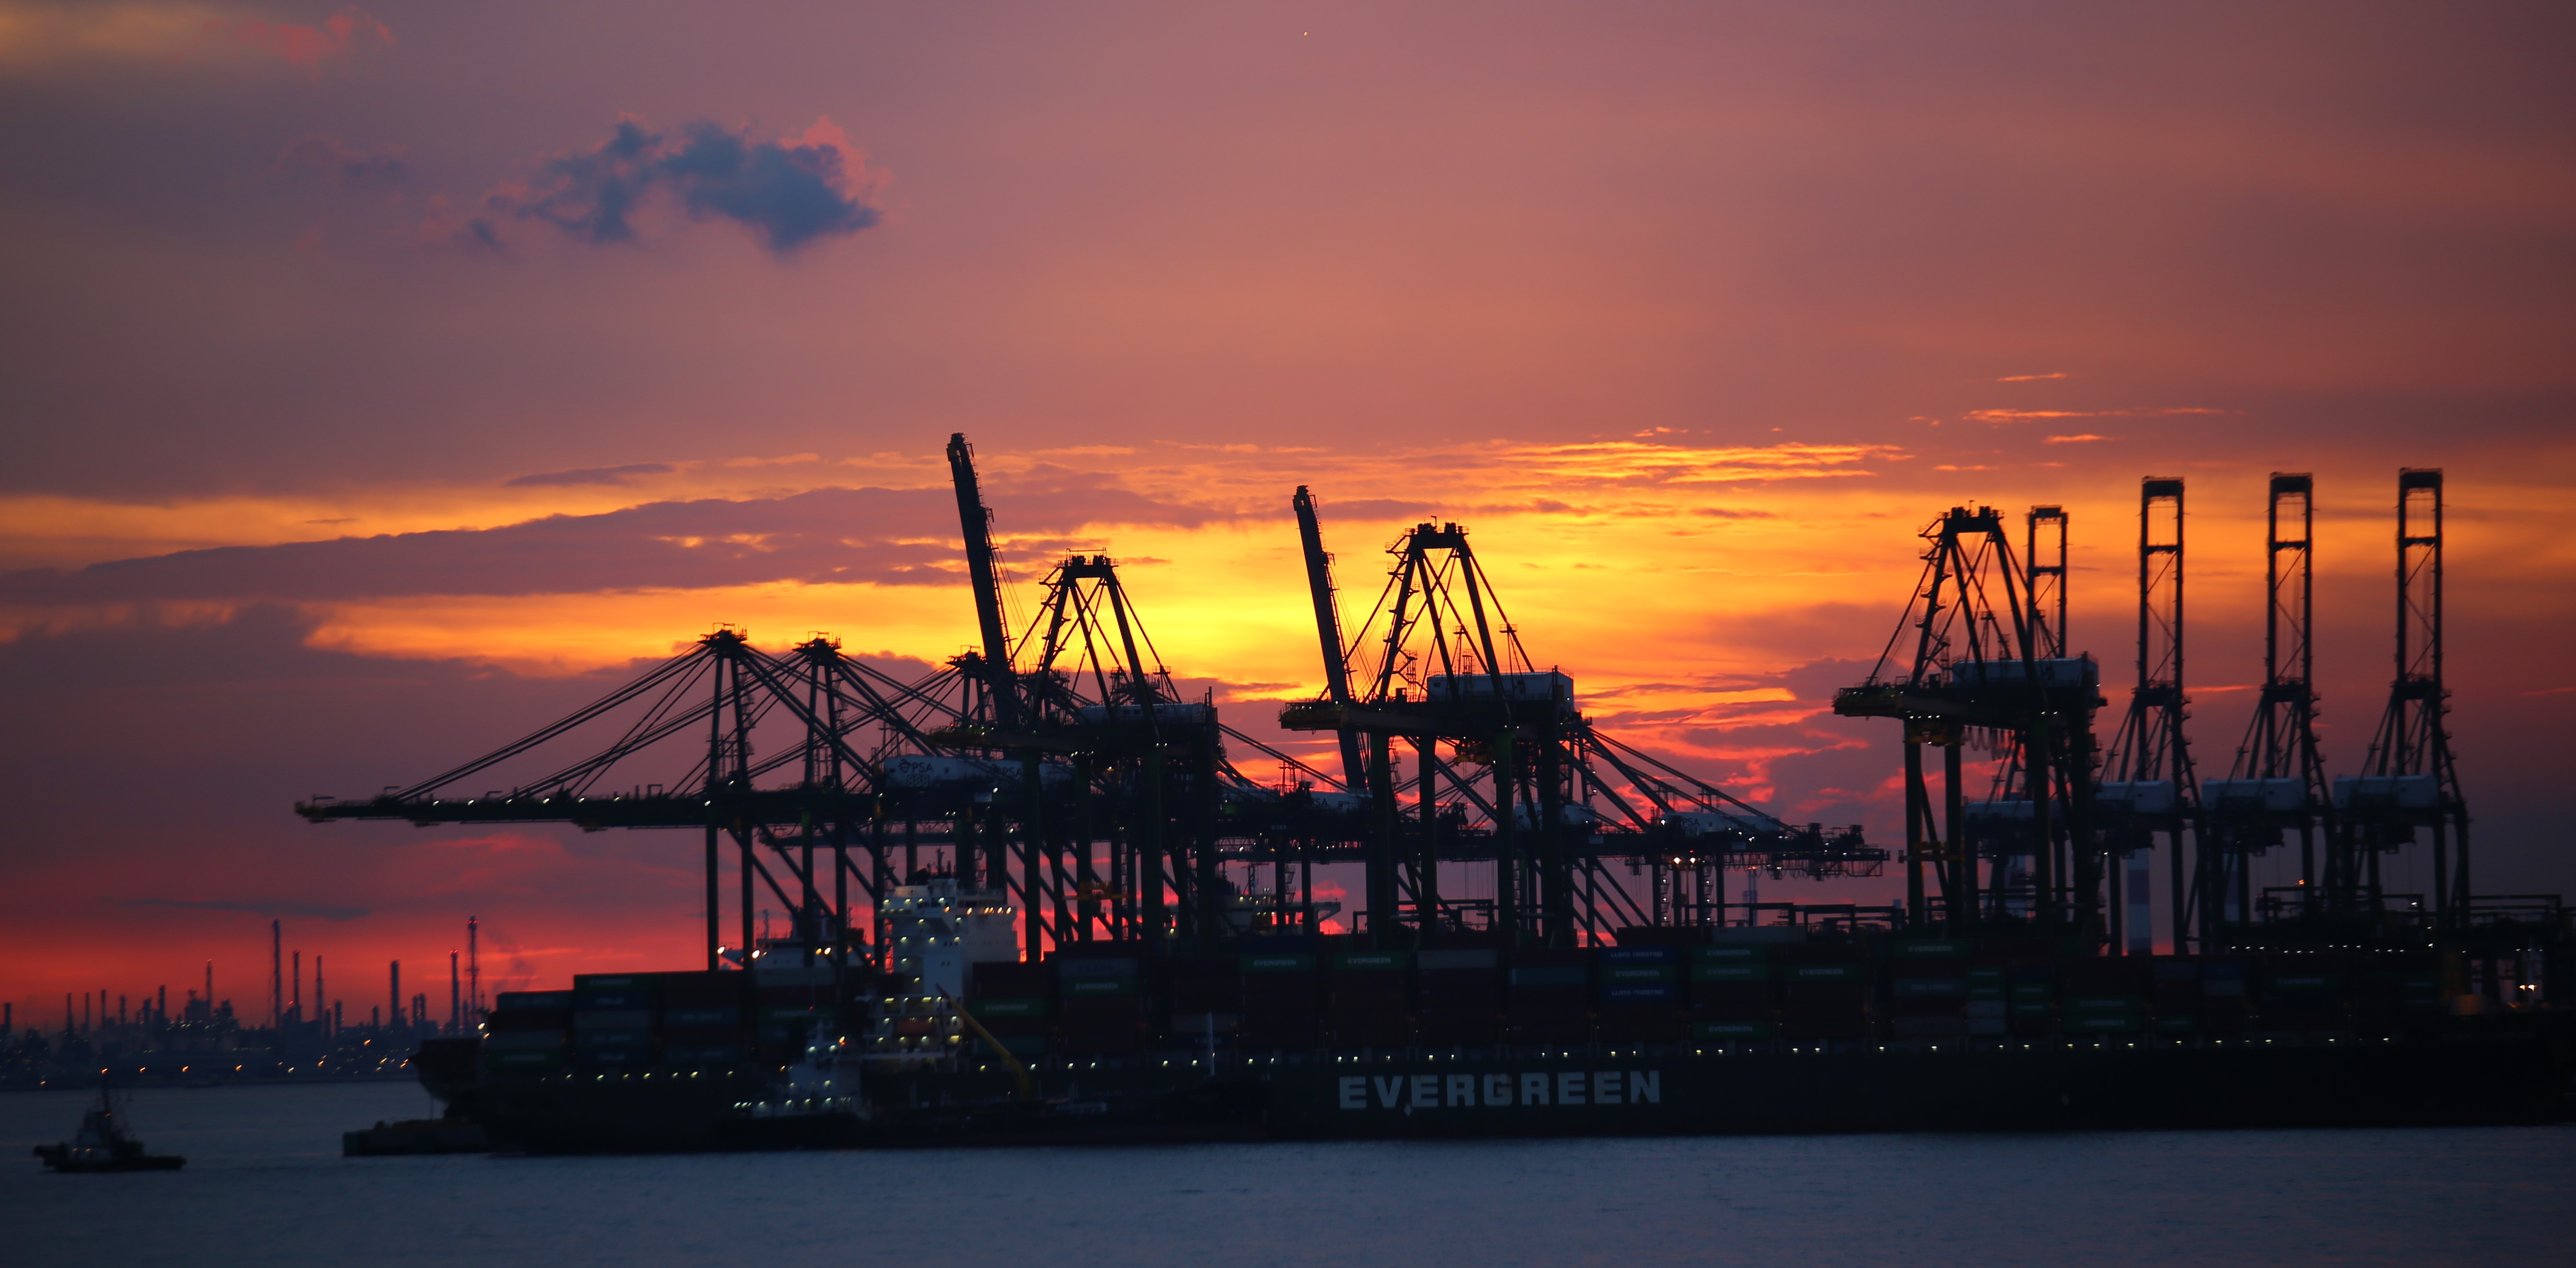 Sunset in Singapore Port